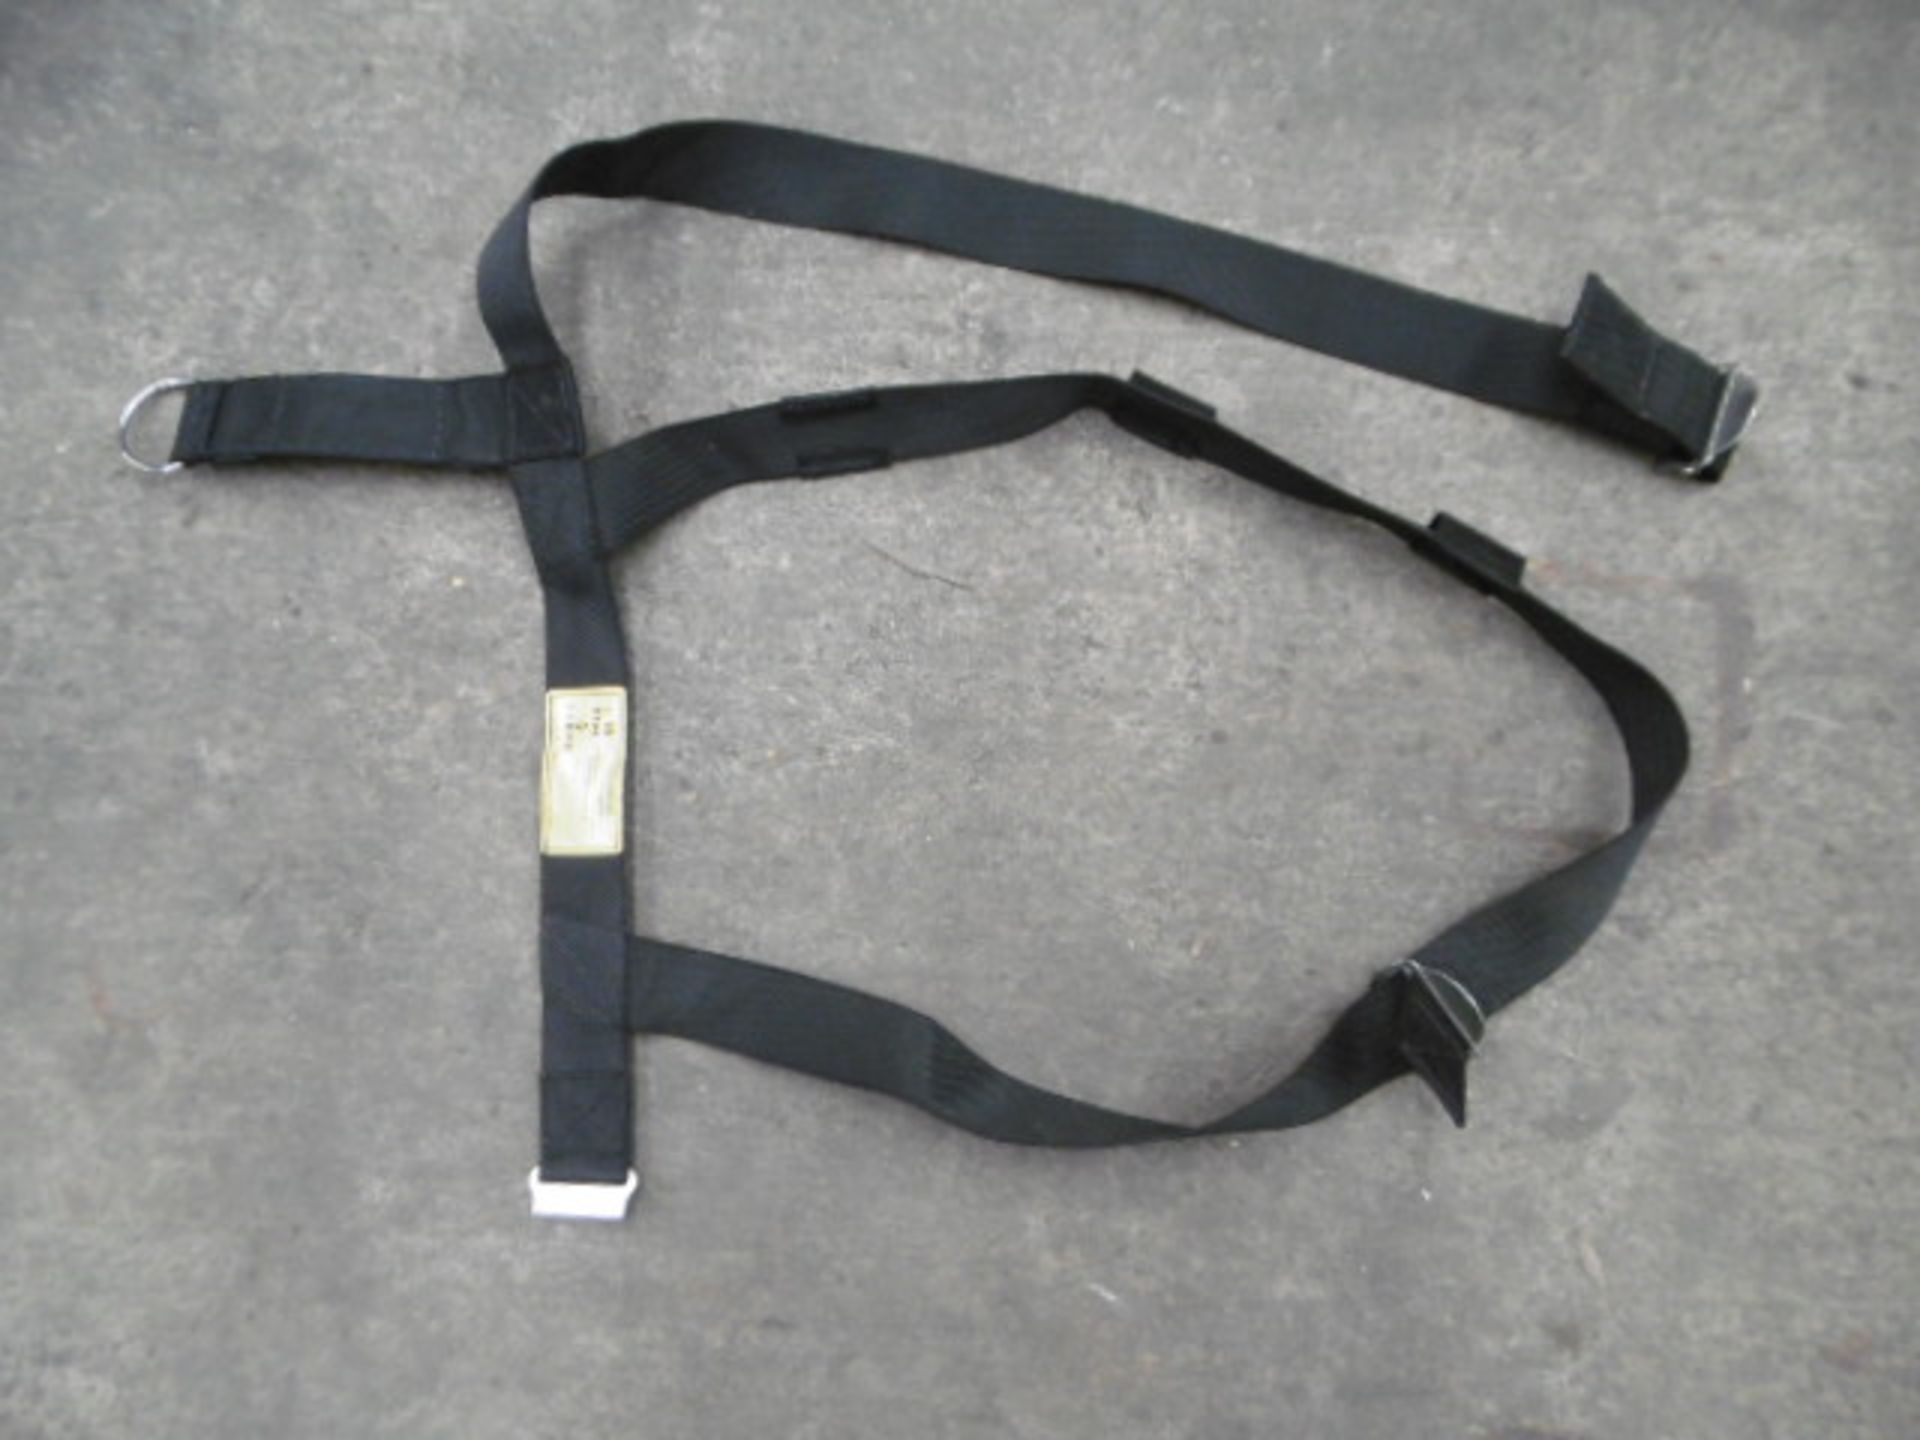 6 x Sabre Bandolier Harnesses - Image 2 of 3